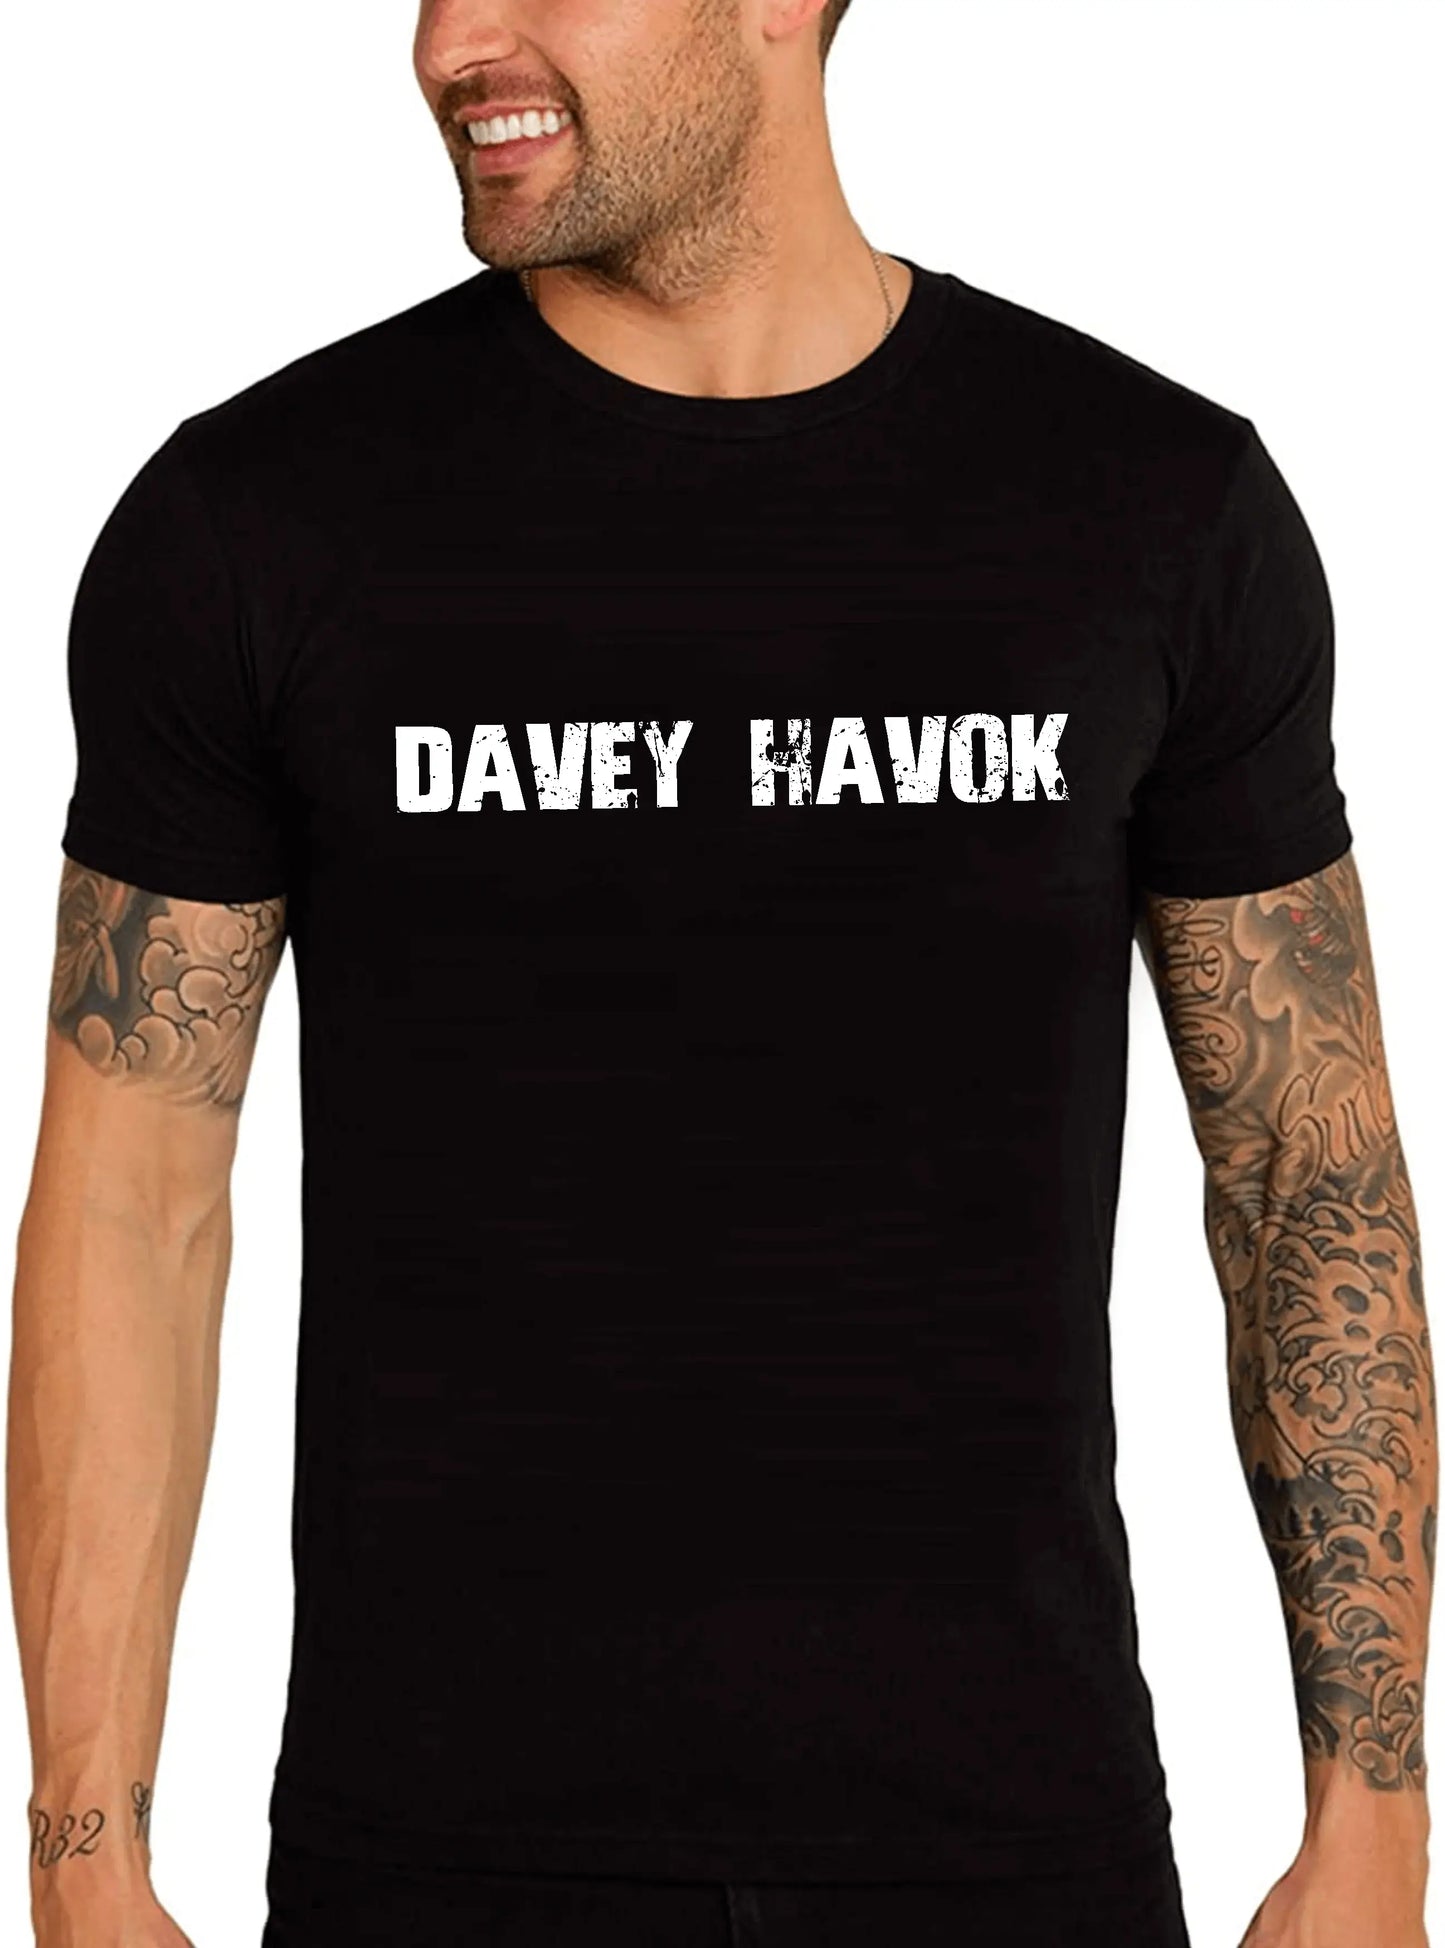 Men's Graphic T-Shirt Davey Havok Eco-Friendly Limited Edition Short Sleeve Tee-Shirt Vintage Birthday Gift Novelty